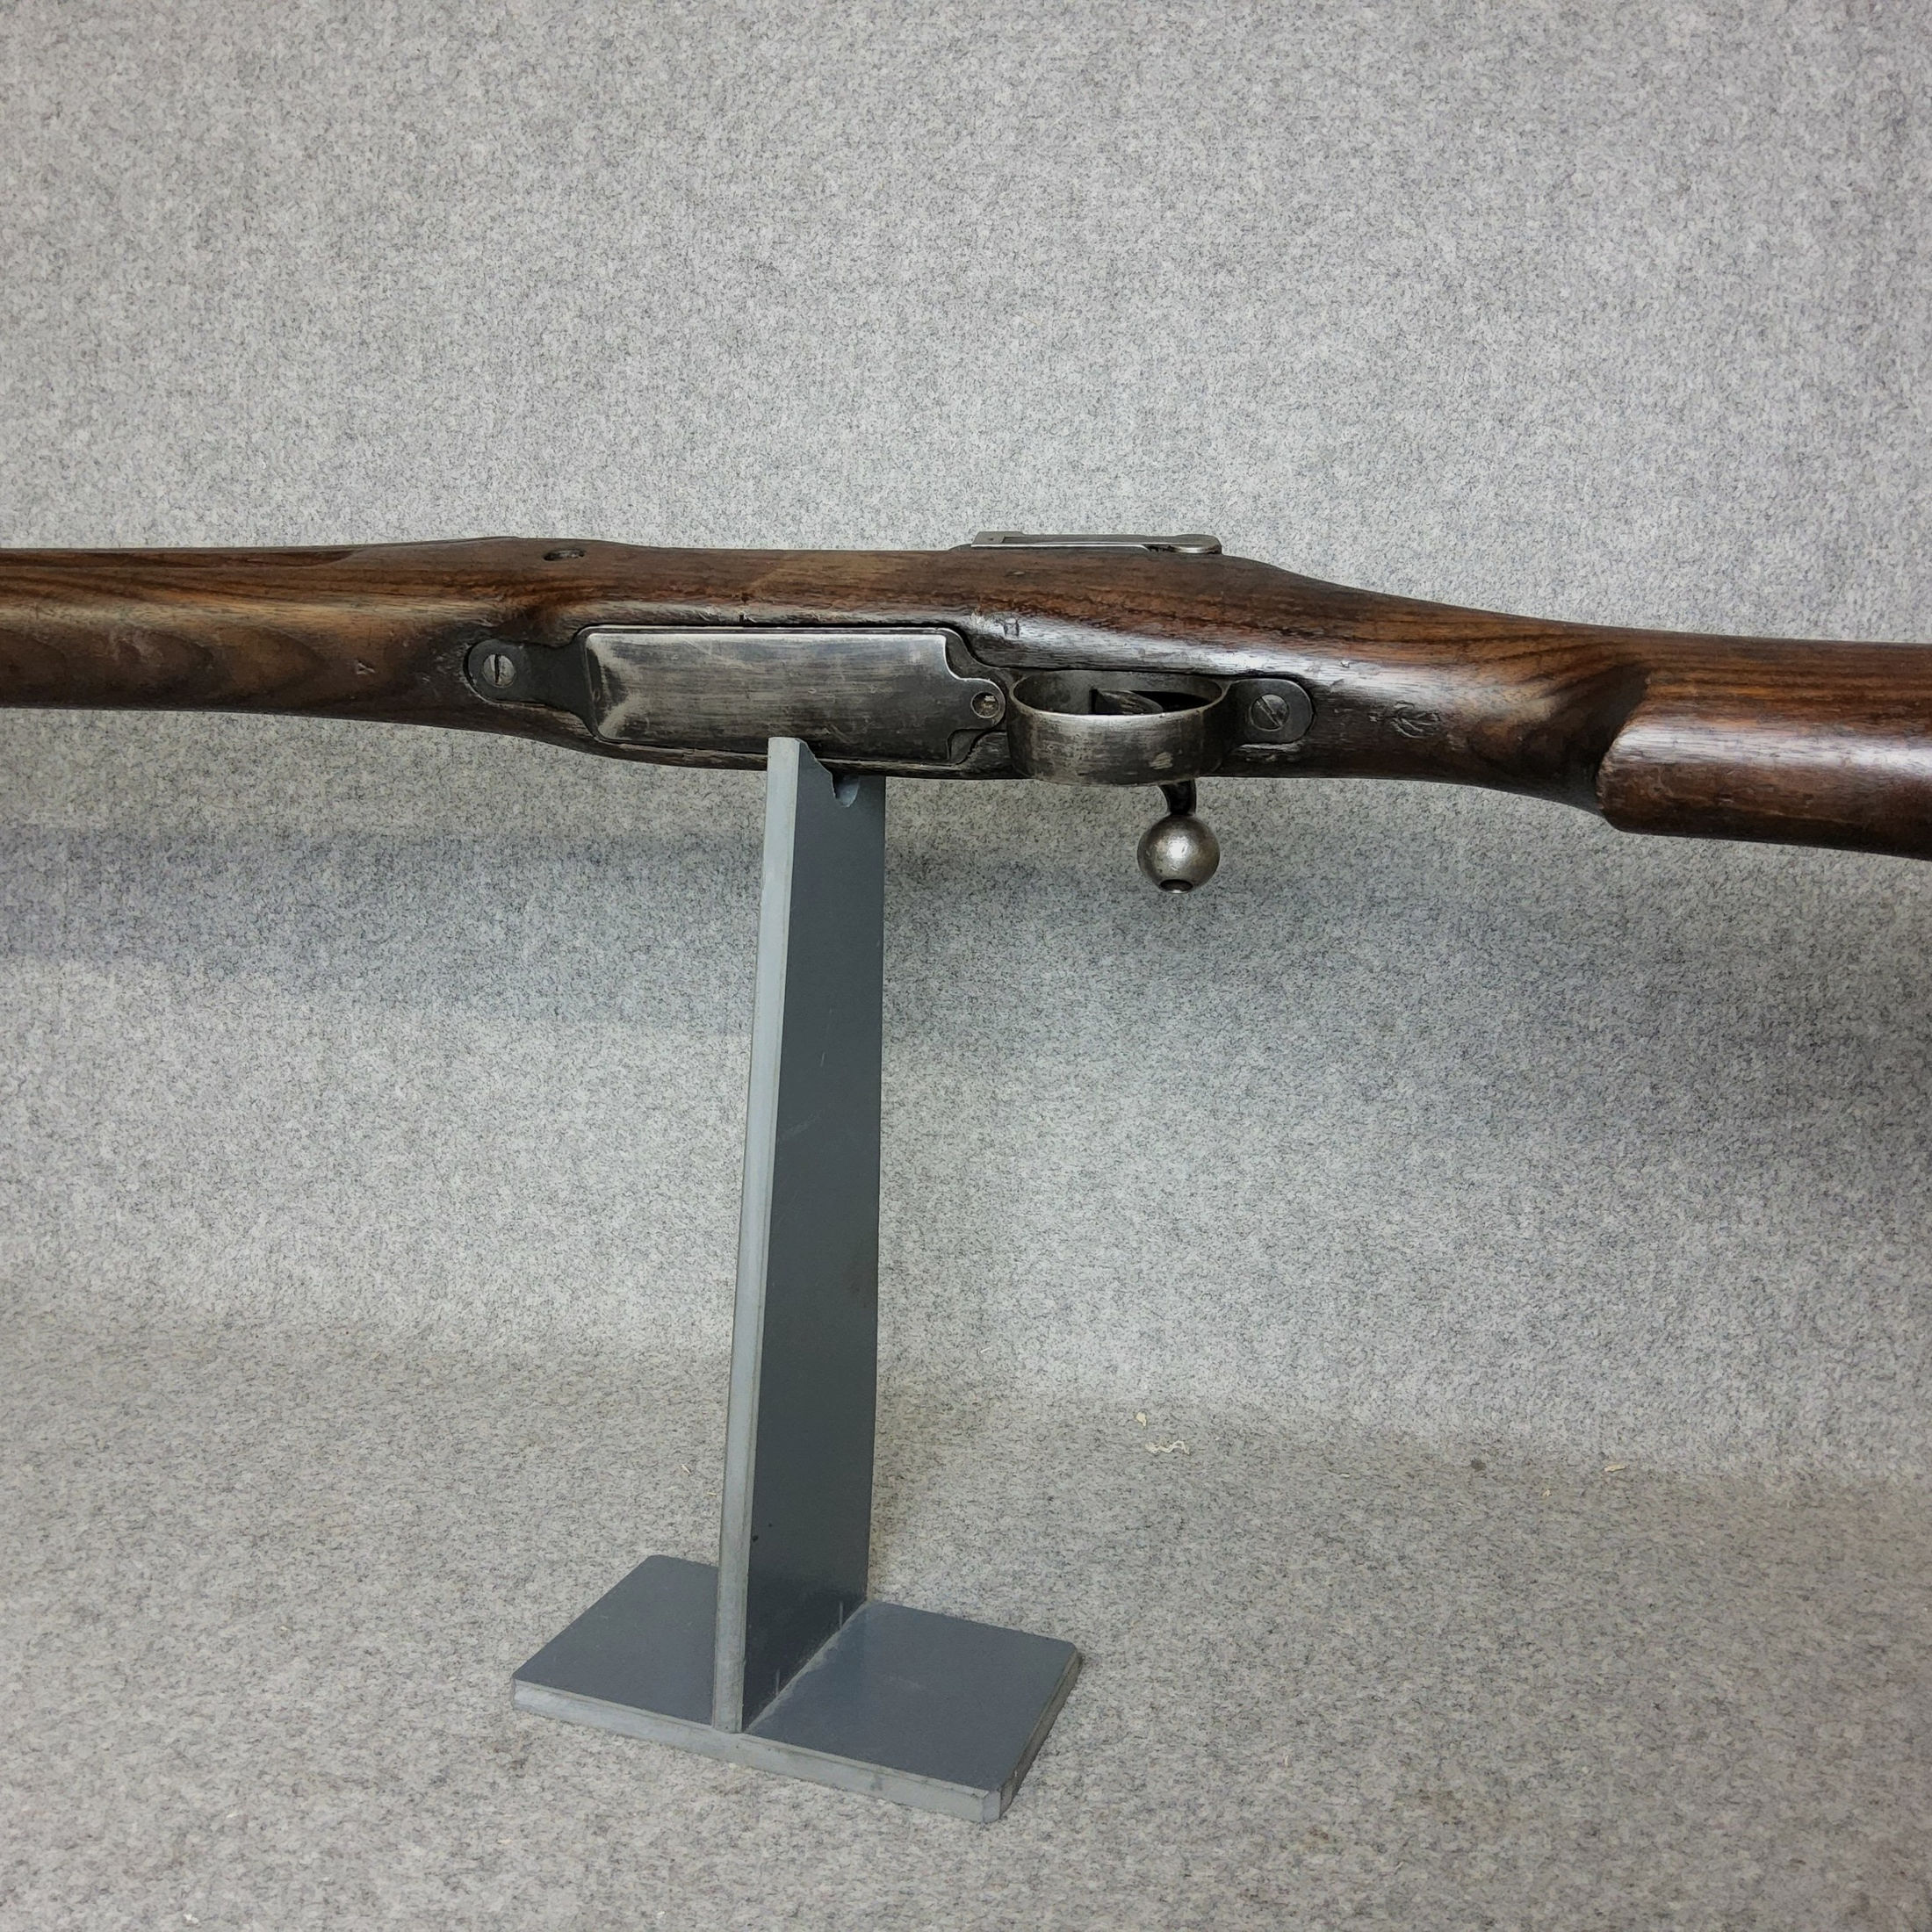 Remington	 Mod. of 1917-P17